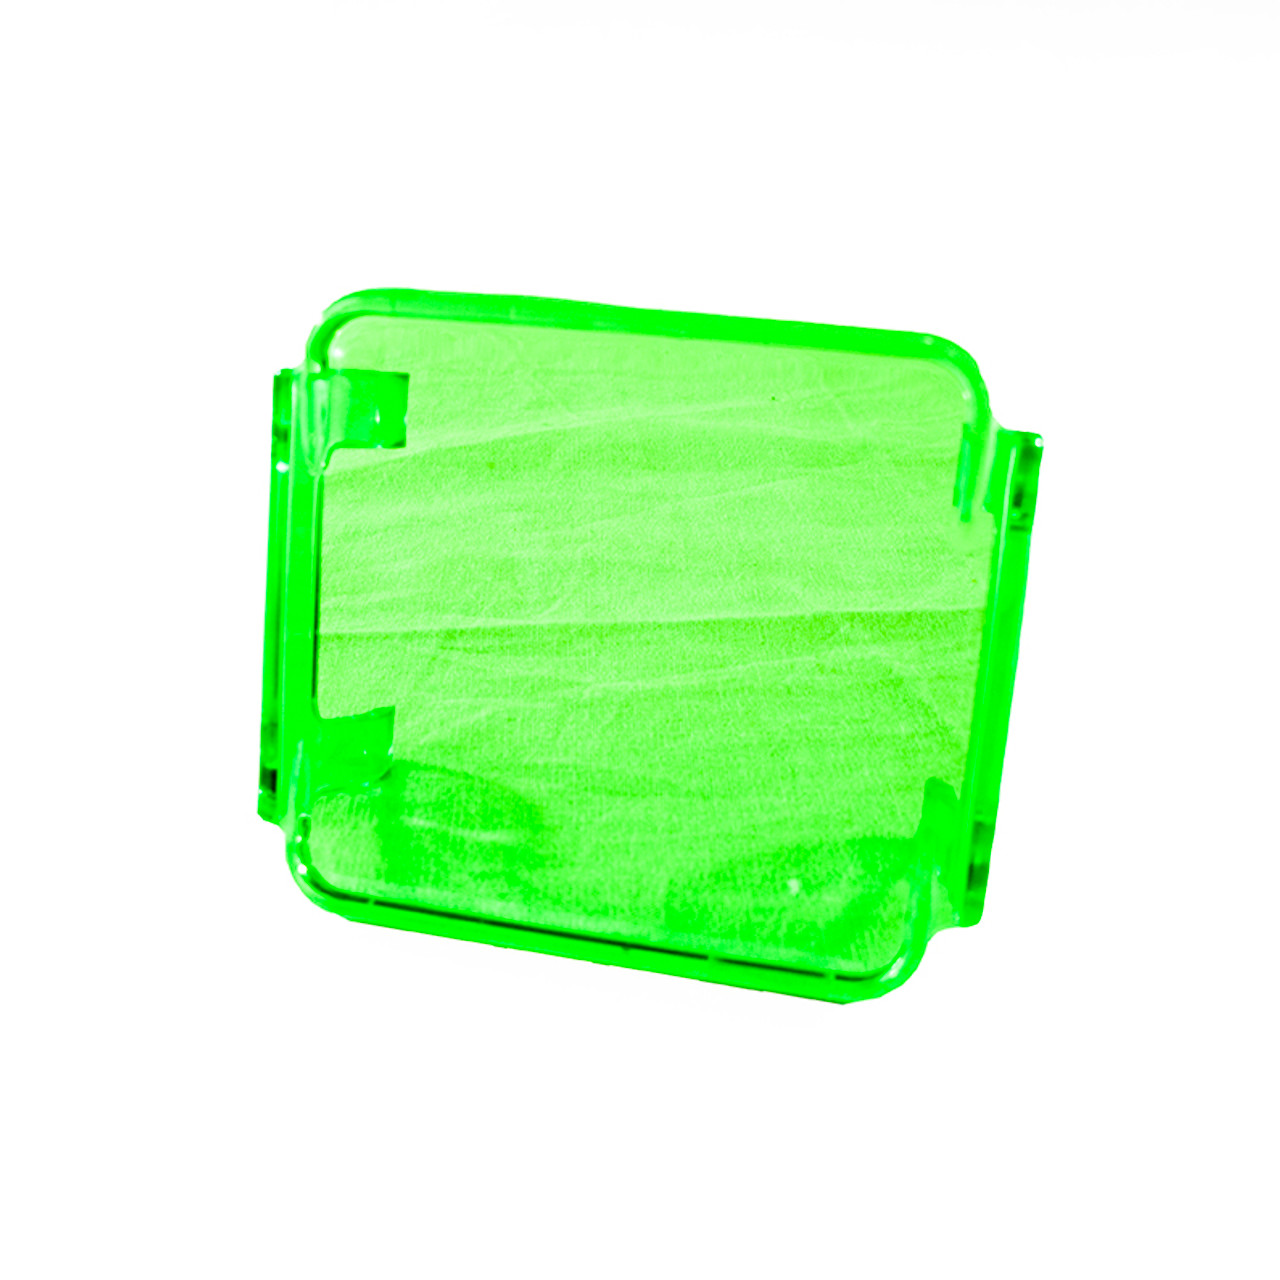 Translucent 3x3 Inch Protective Spotlight Cover Green Race Sport Lighting